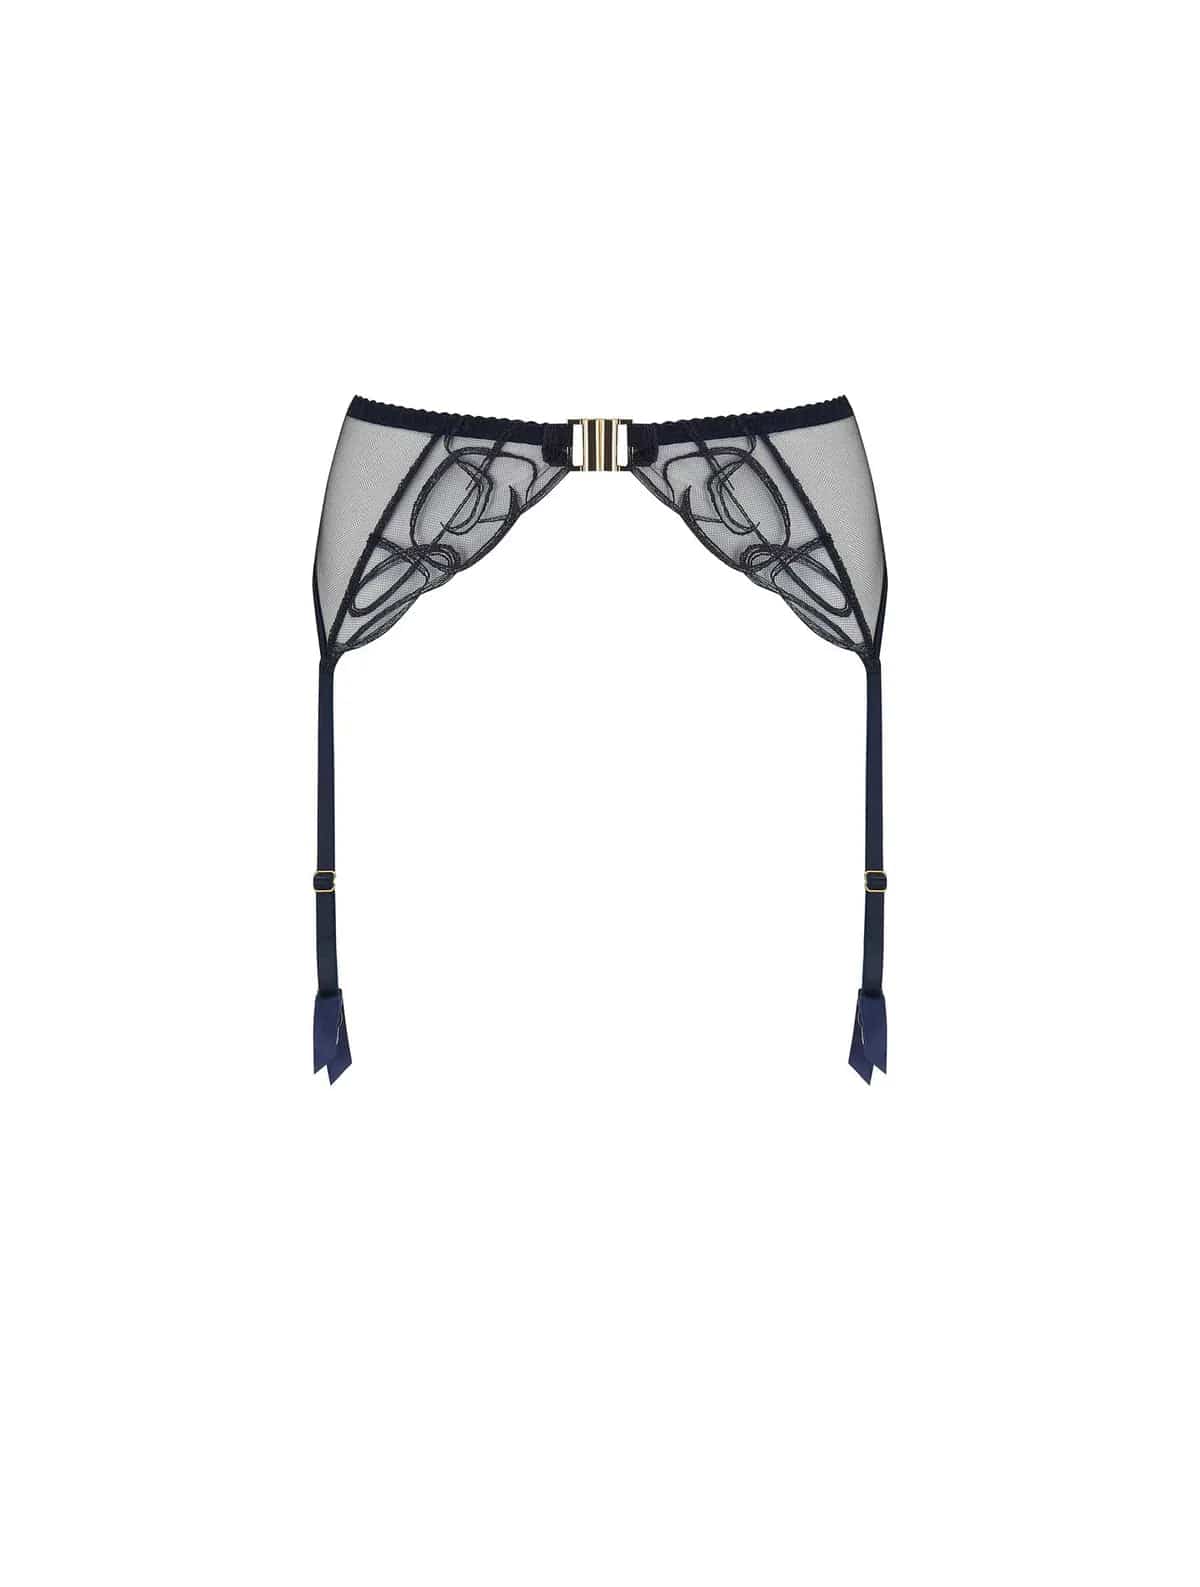 8 Strap Luxury All Lace Suspender Belt Black (Garter Belt) NYLONZ UK